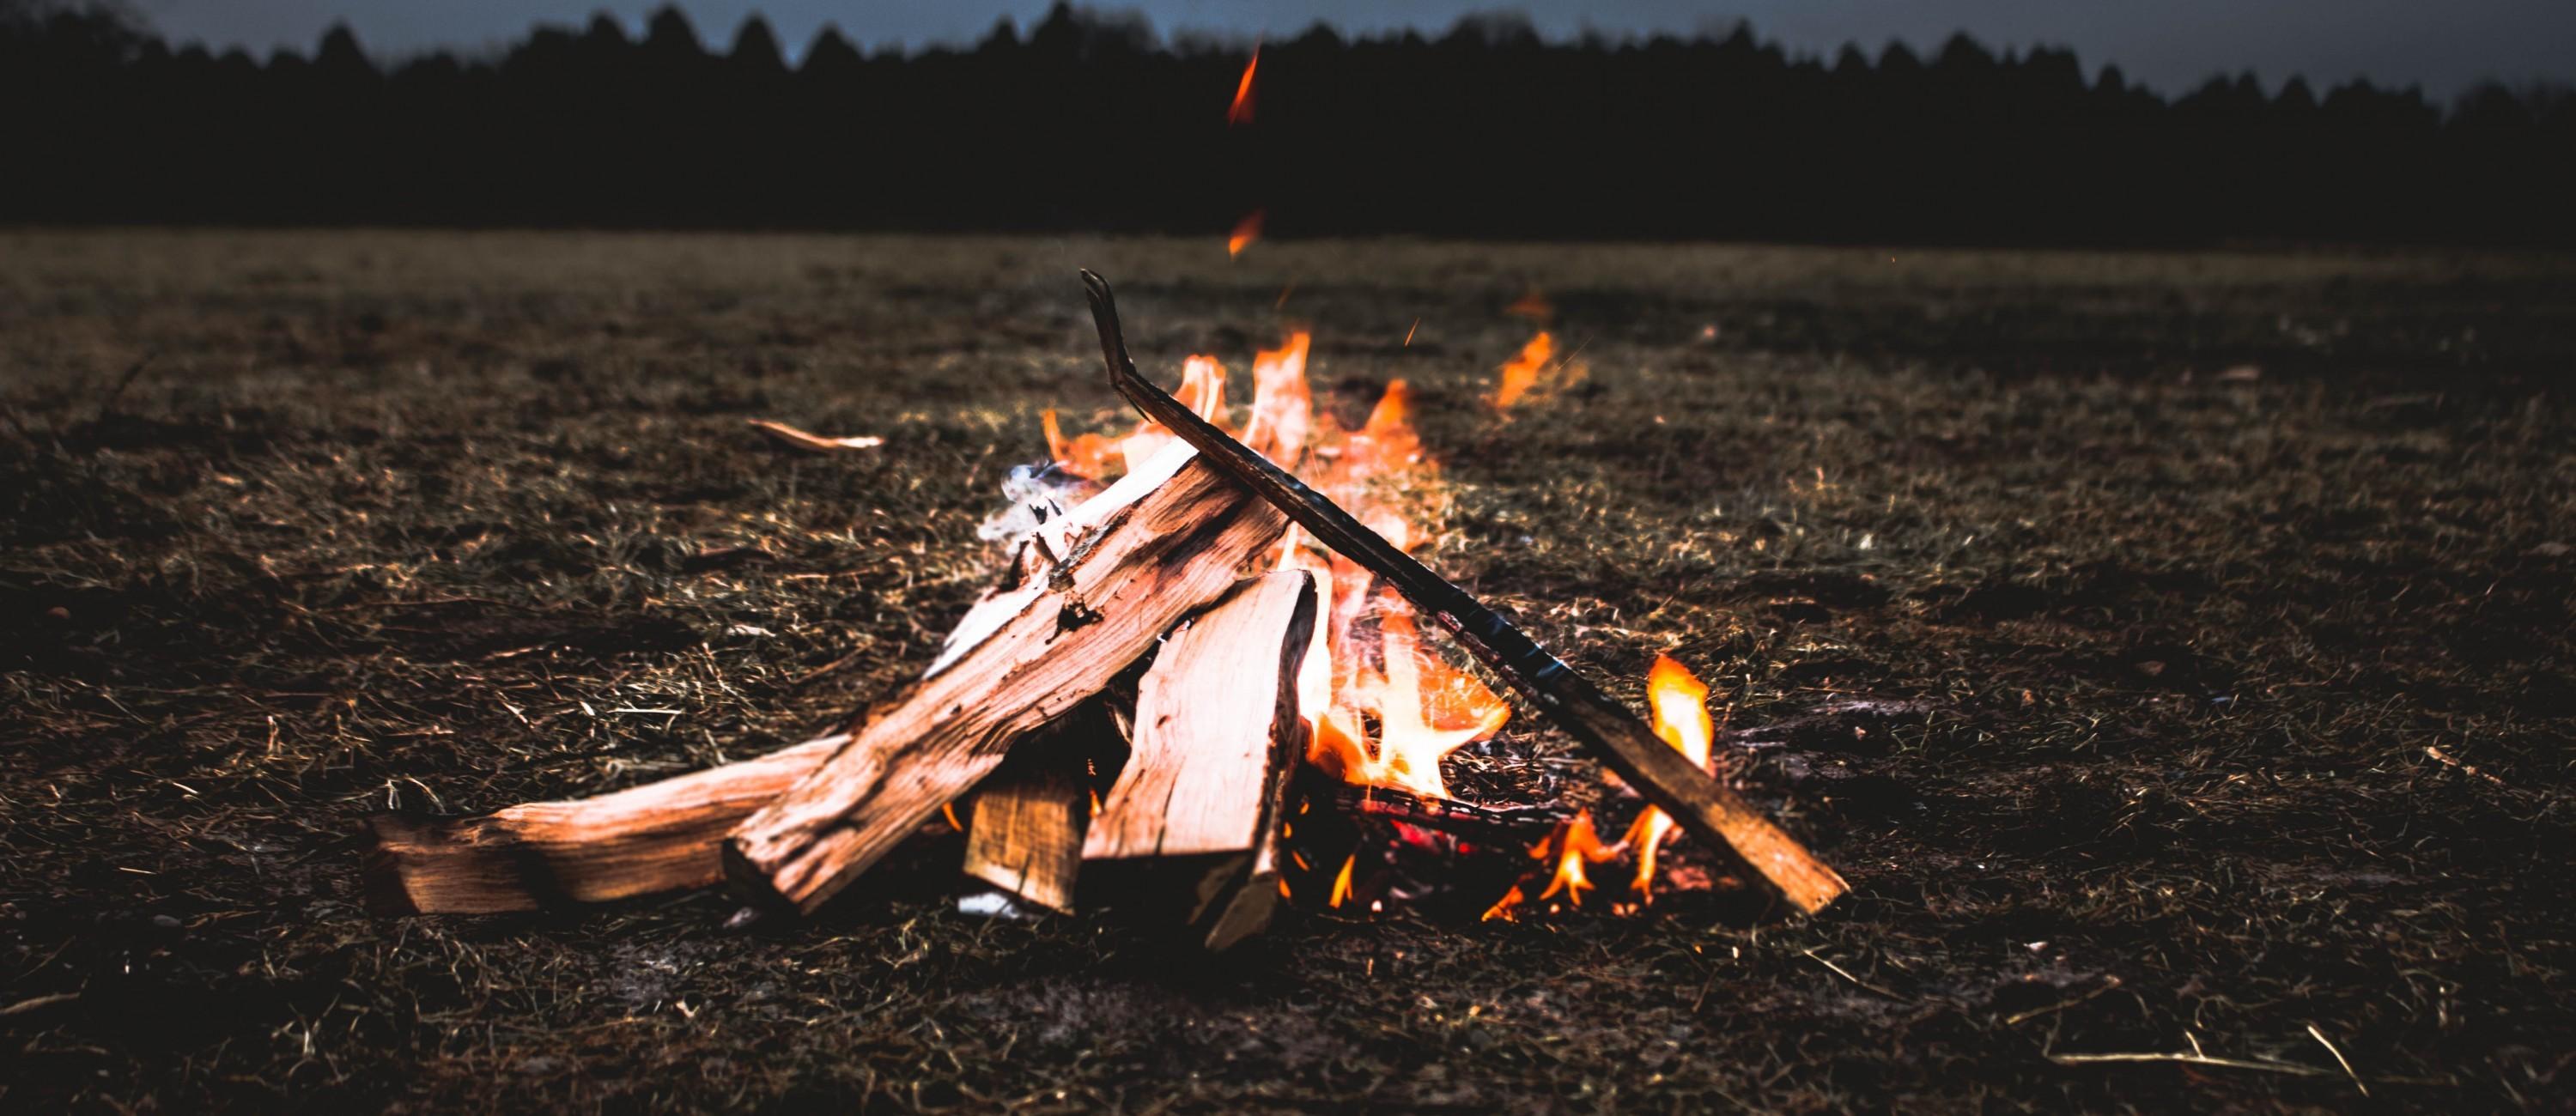 Download 3000x1300 Bonfire, Campfire, Night, Field, Firewood